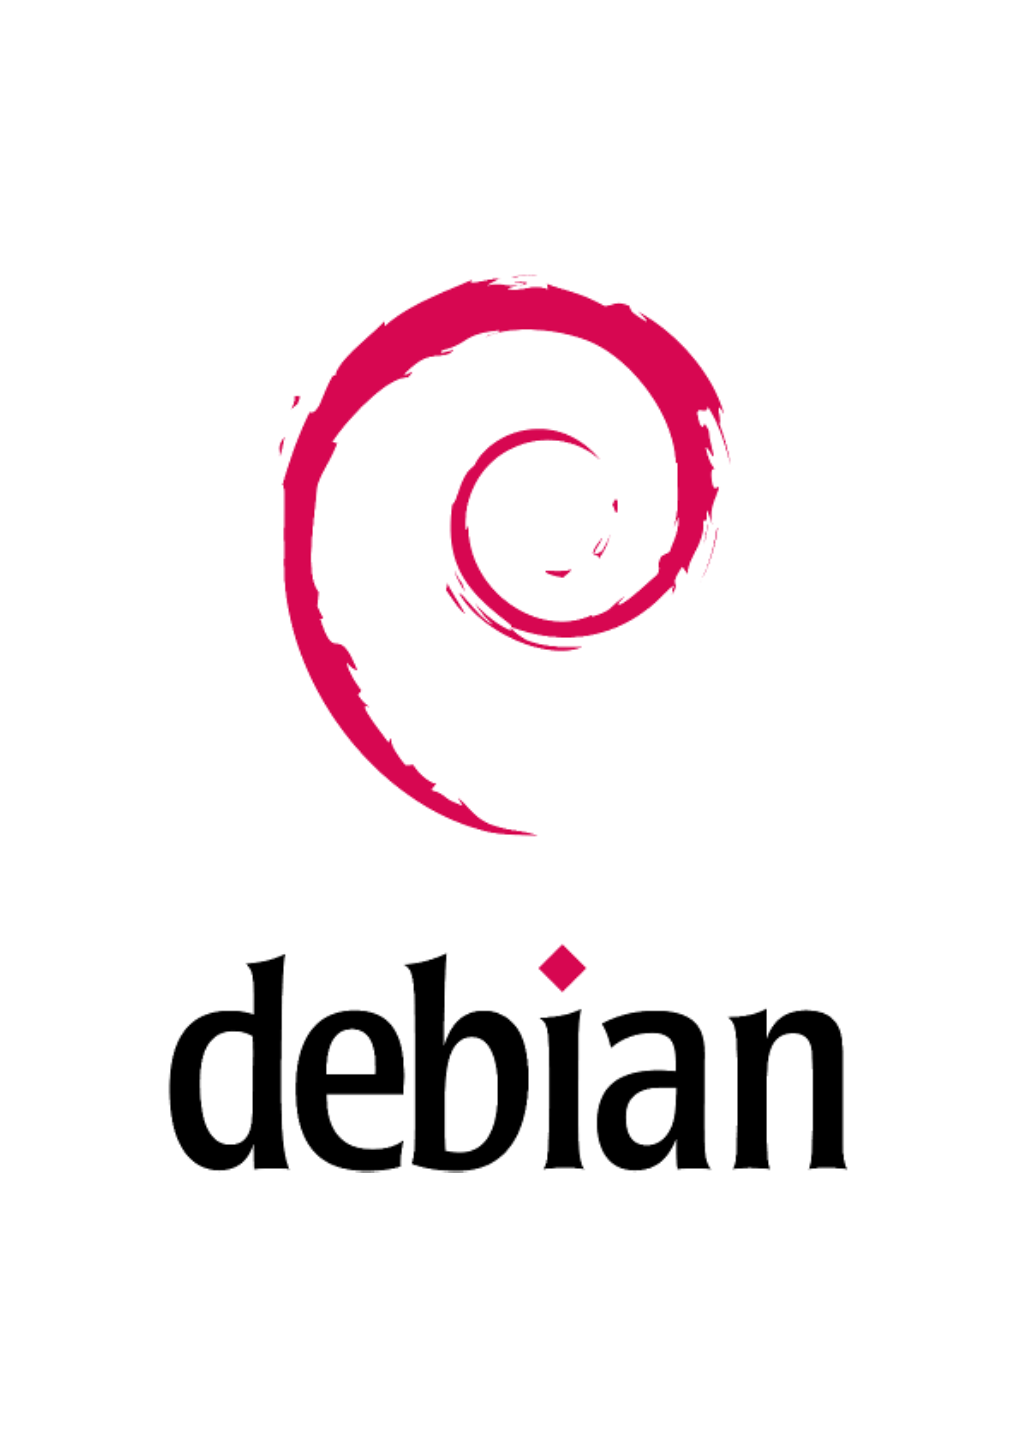 Debian Reference I